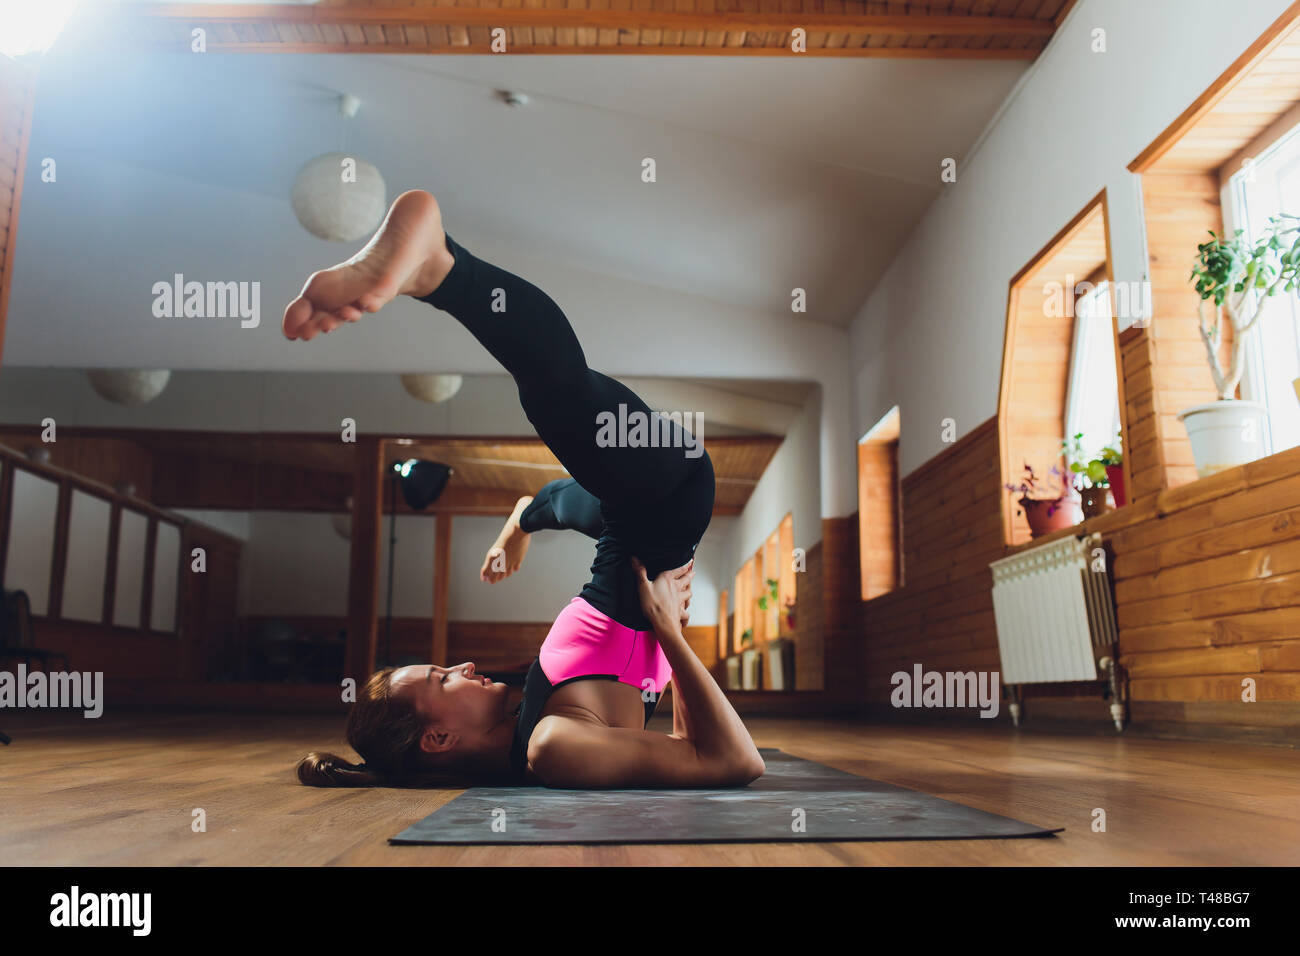 💜 Yoga Pose Challenge Day 18: Sarvangasana, Shoulder Stand